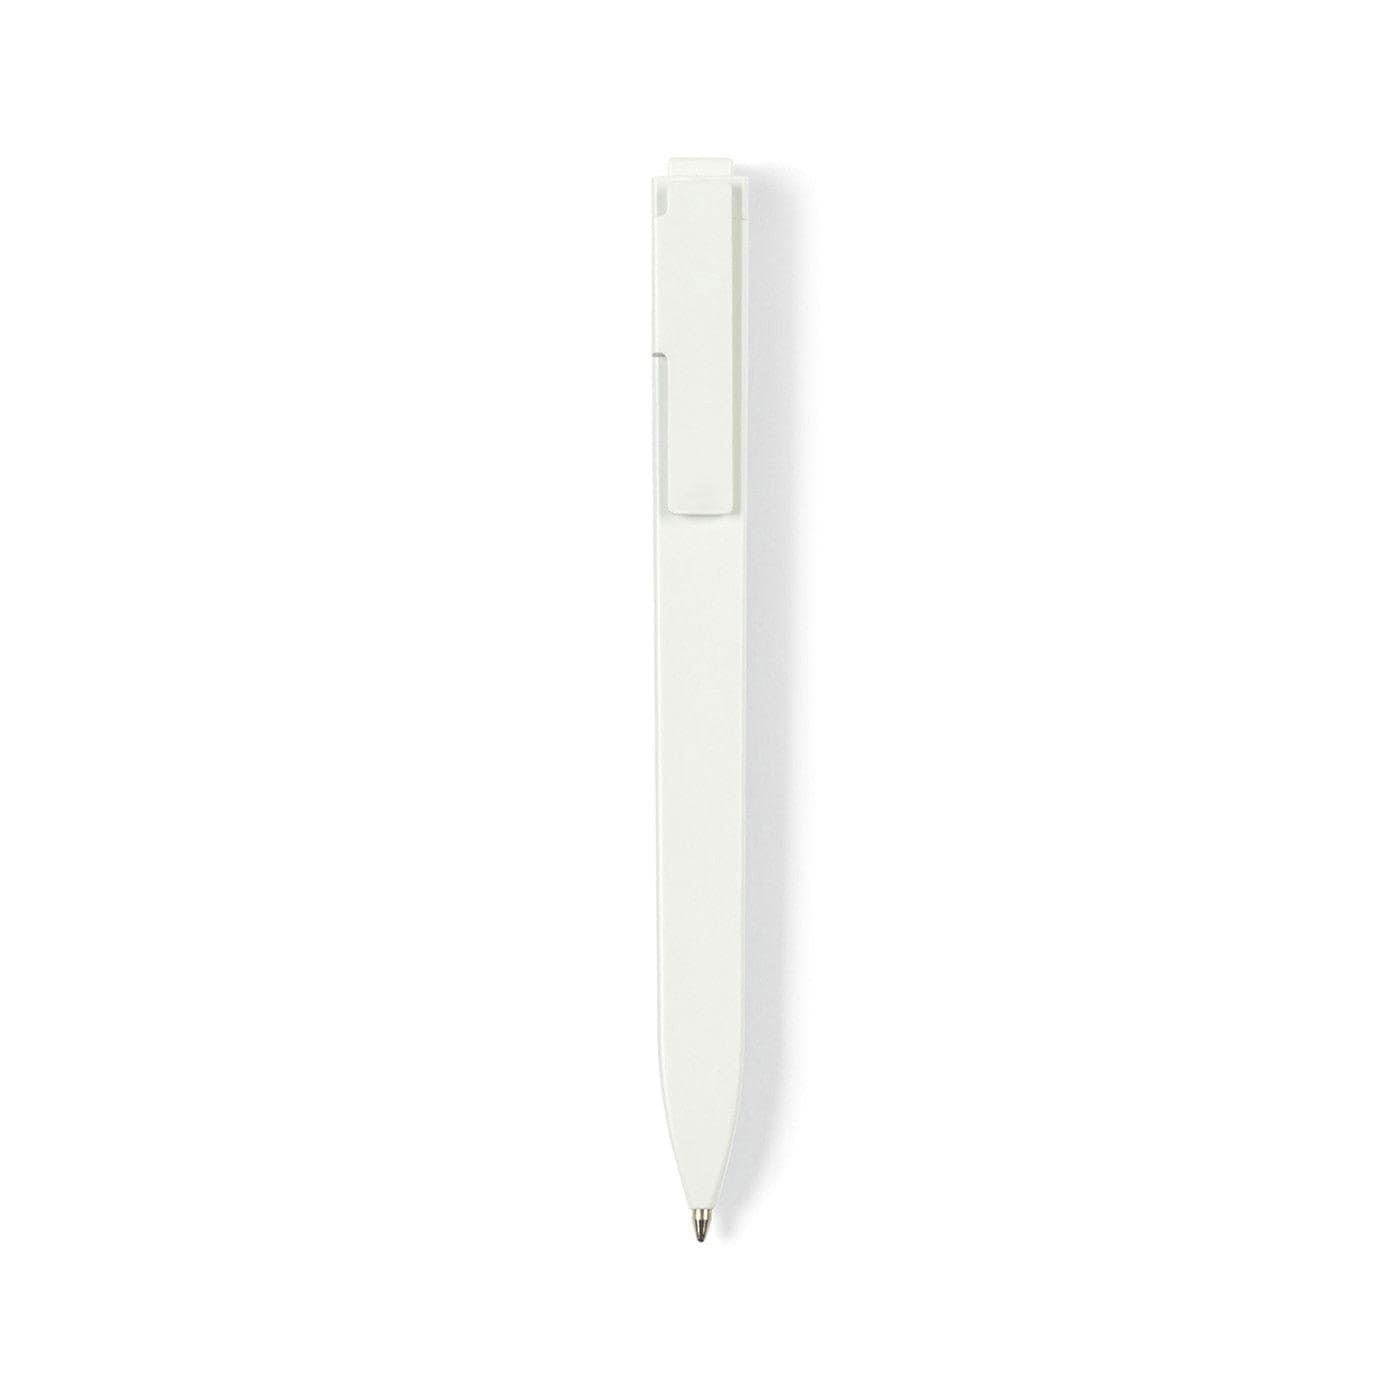 Moleskine® Large Notebook and GO Pen Gift Set – White